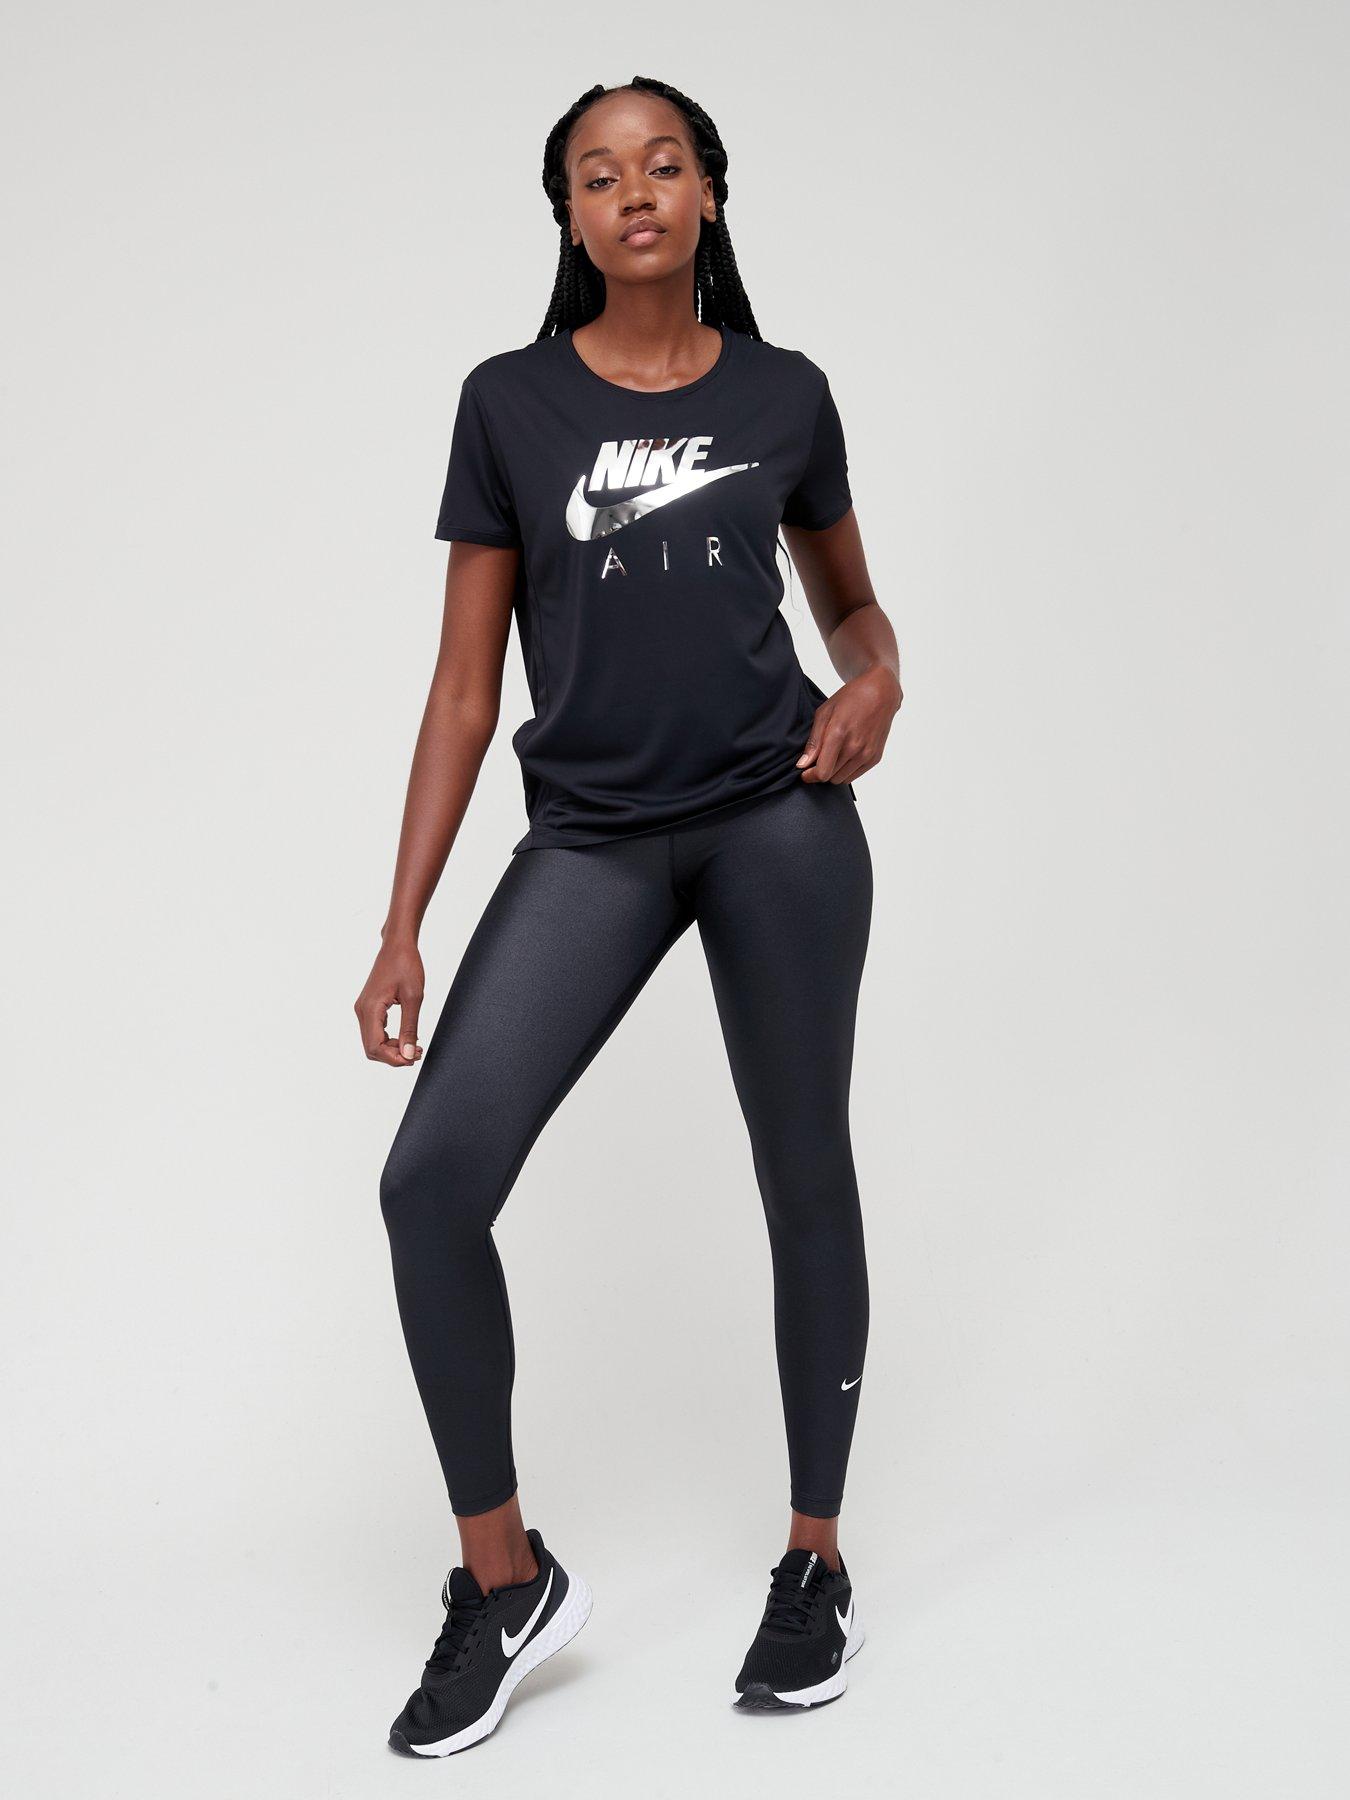 Nike Shine Women's Training Tights - Black